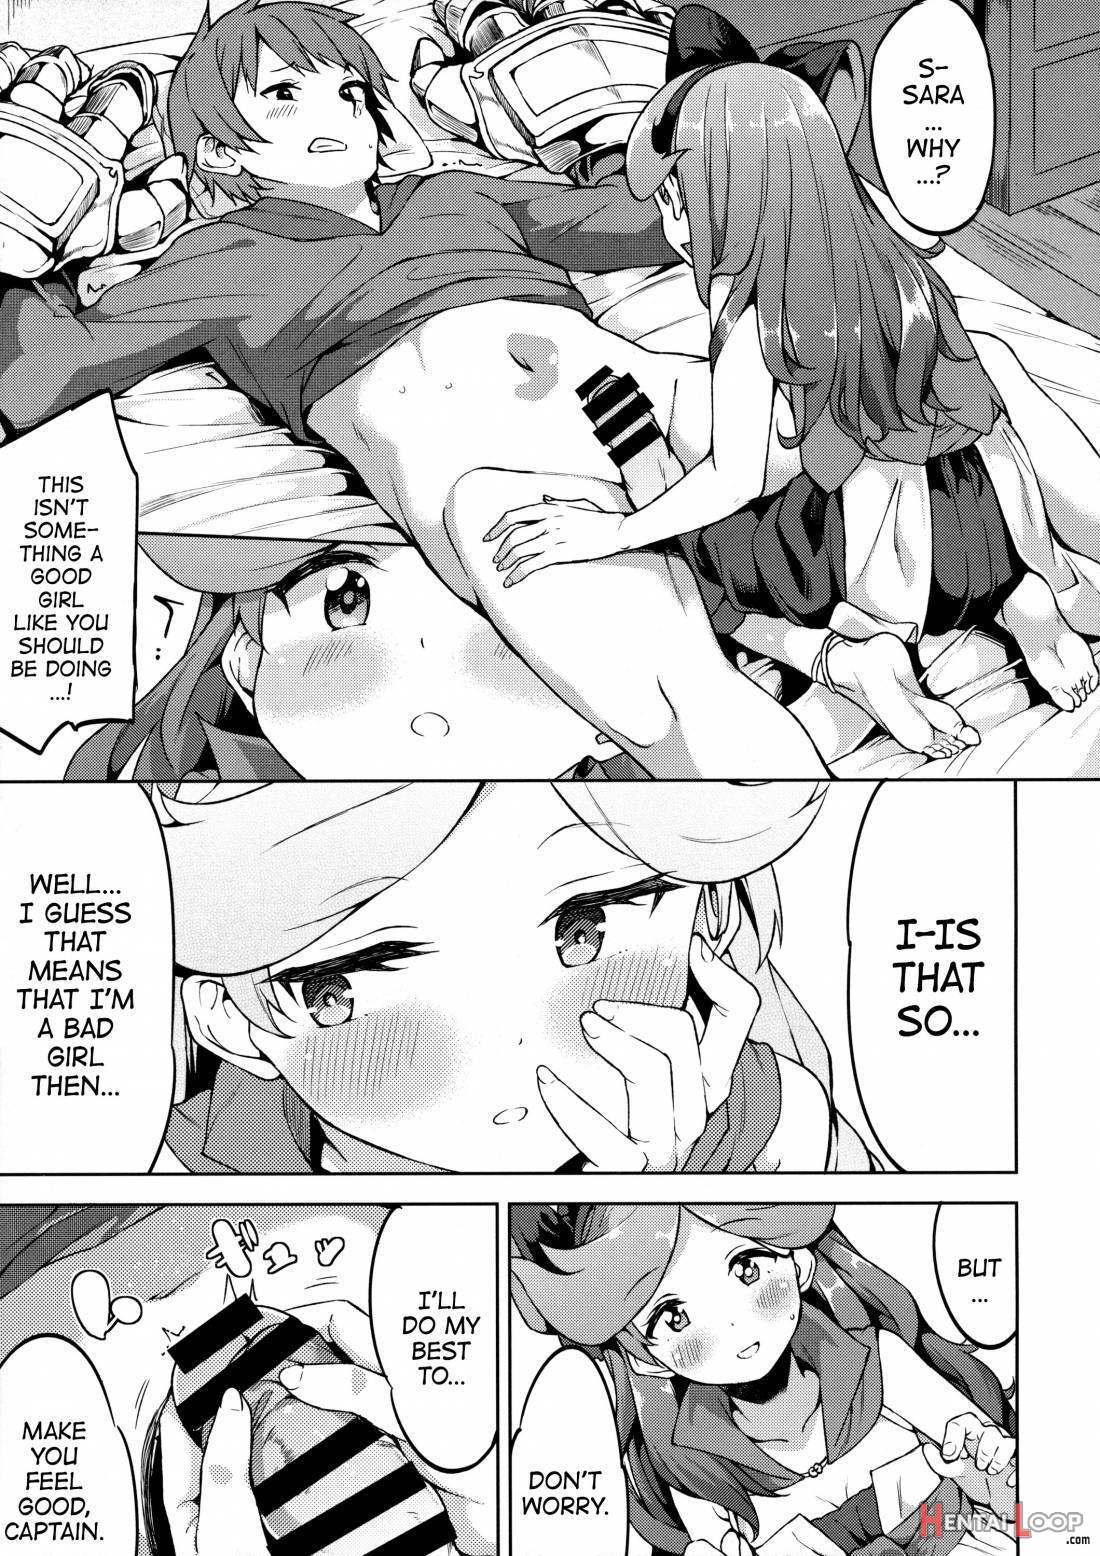 Naughty Sara-chan page 5